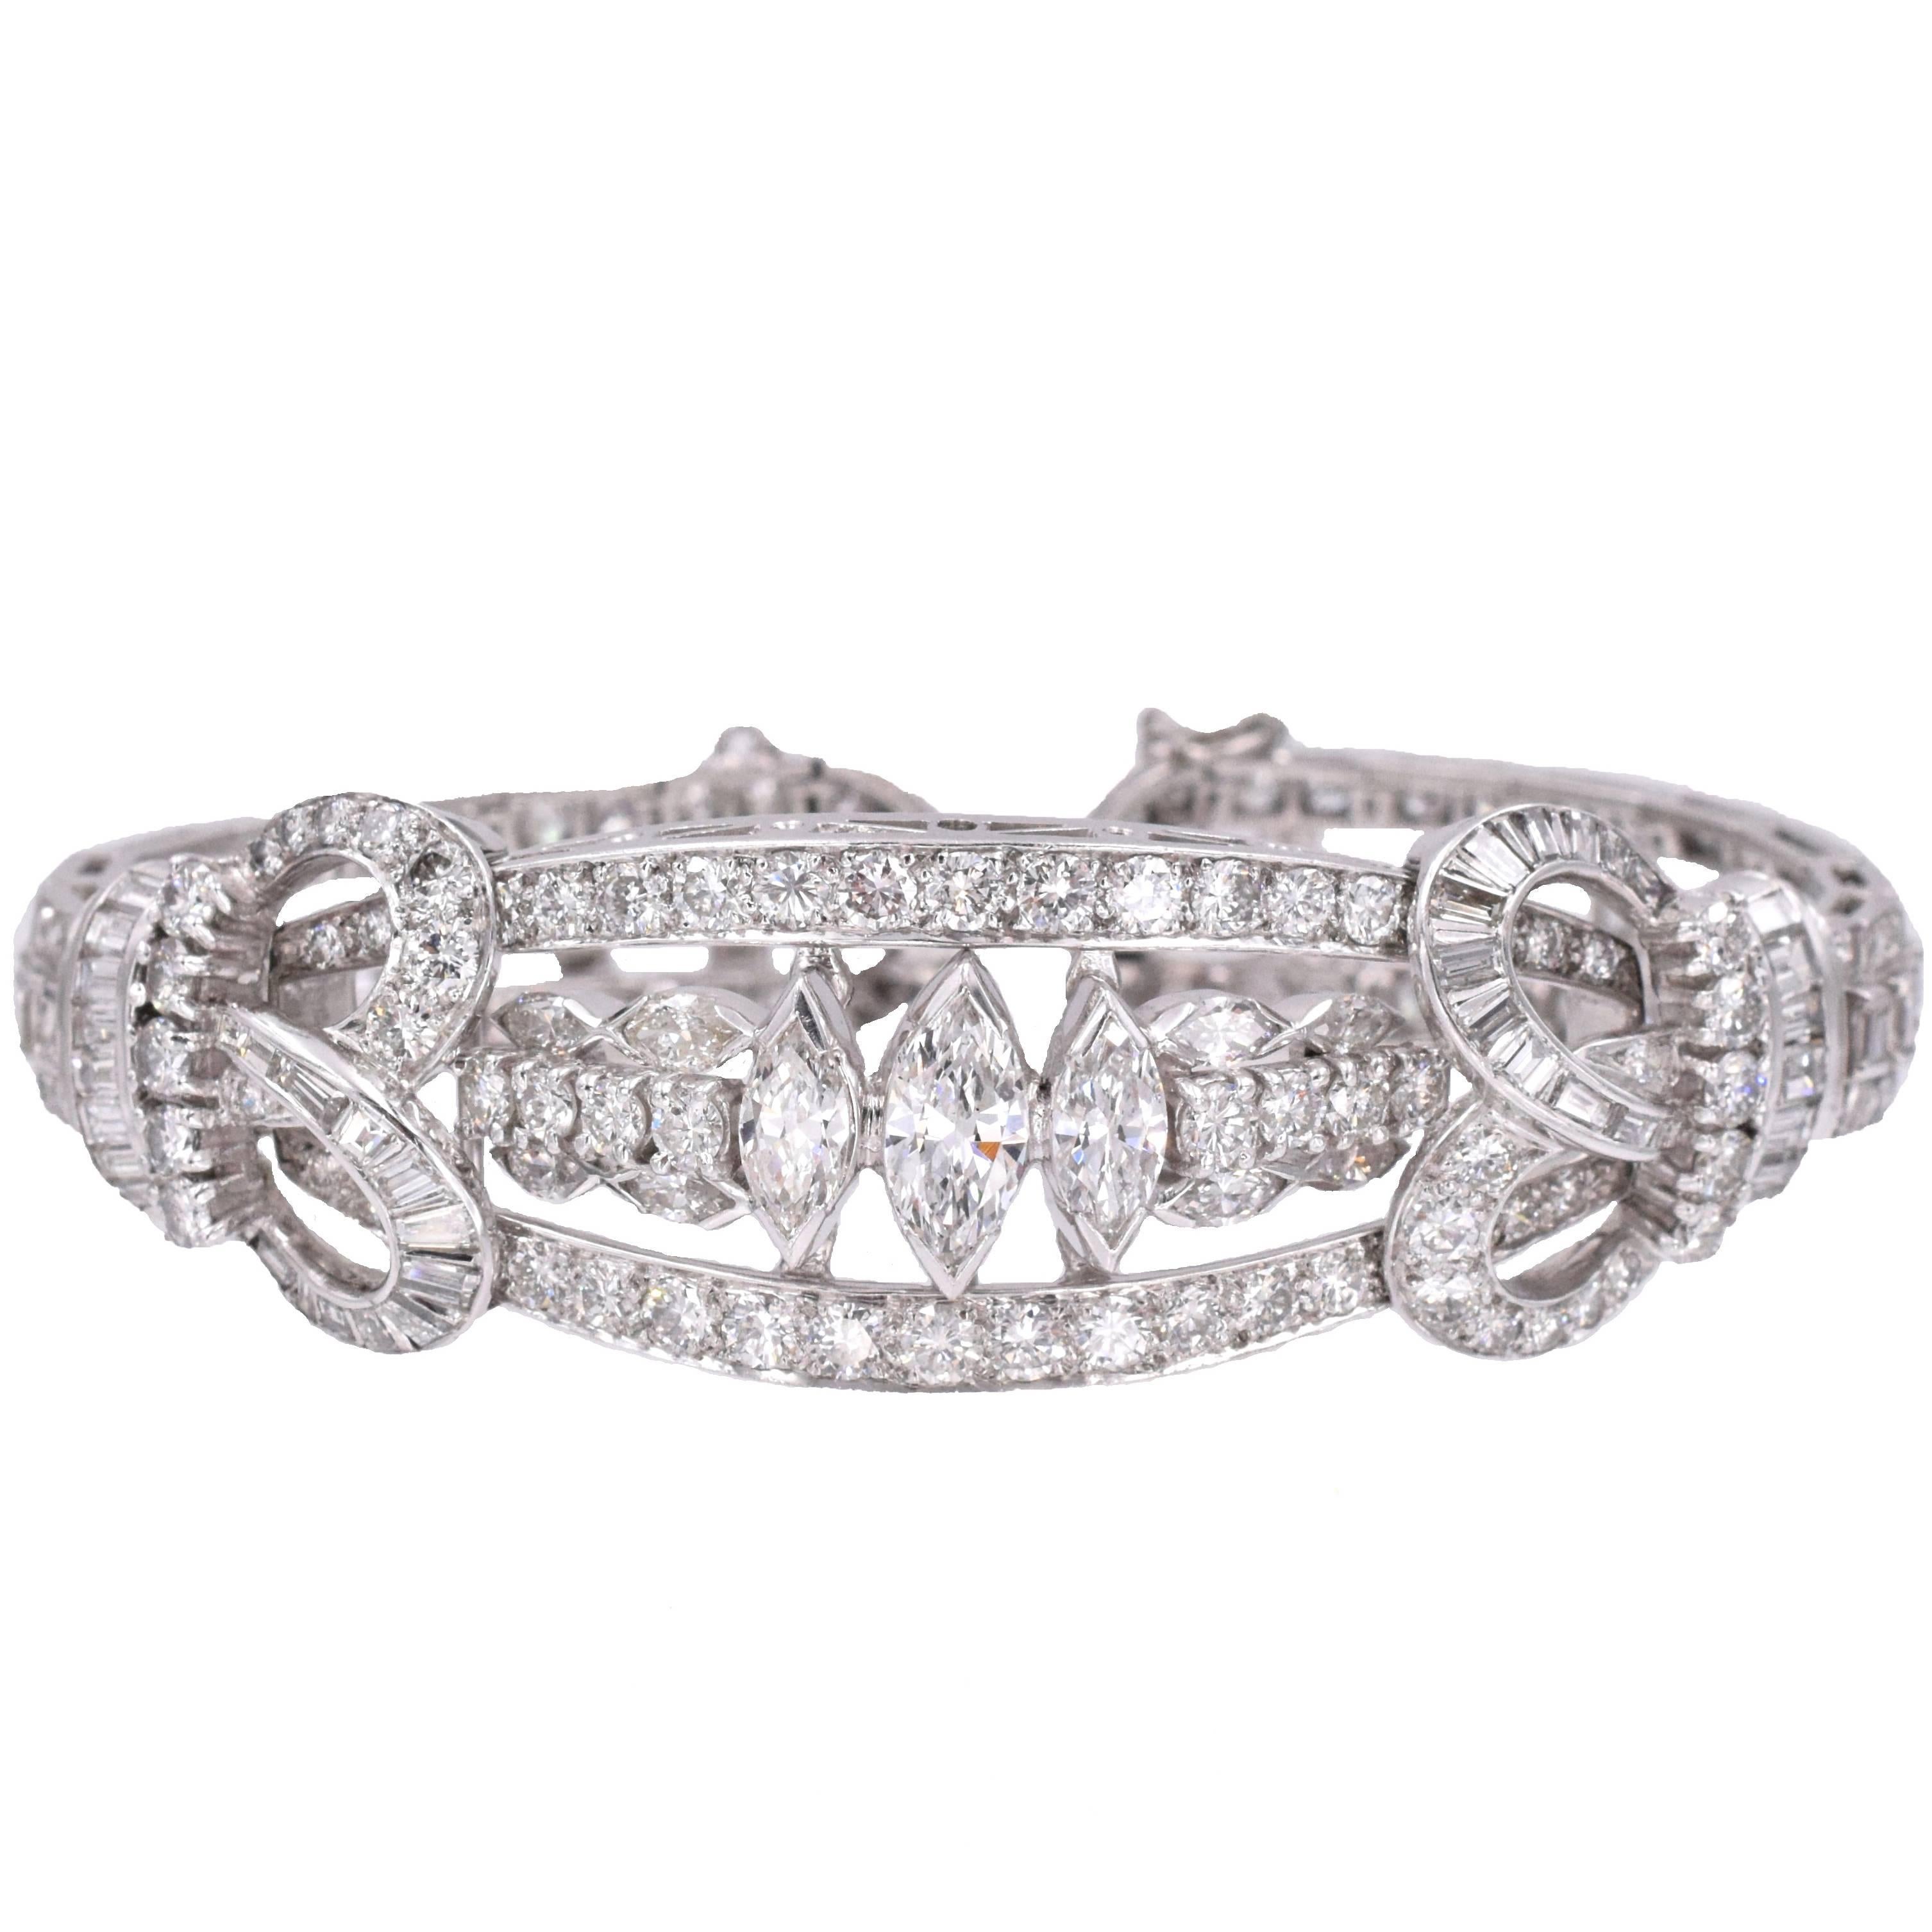 1930 Art Deco Diamond Bracelet